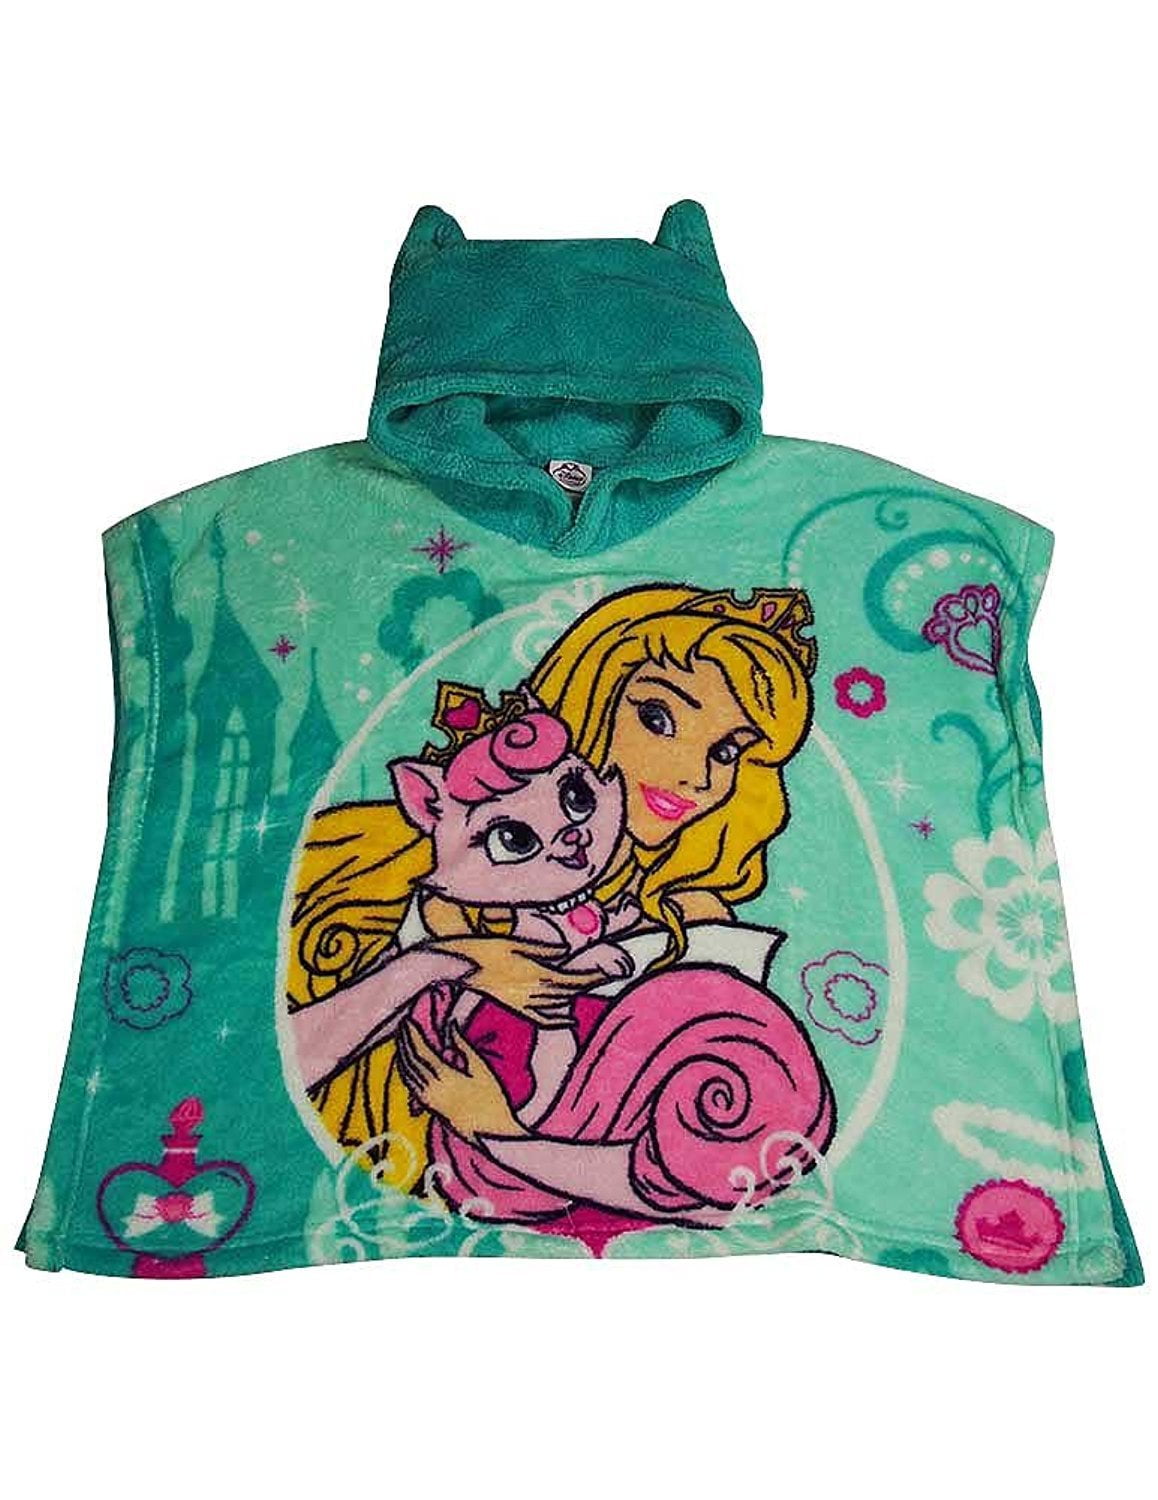 Disney PRINCESS One Size Girls HOODED PONCHO Blanket PRINCESS 